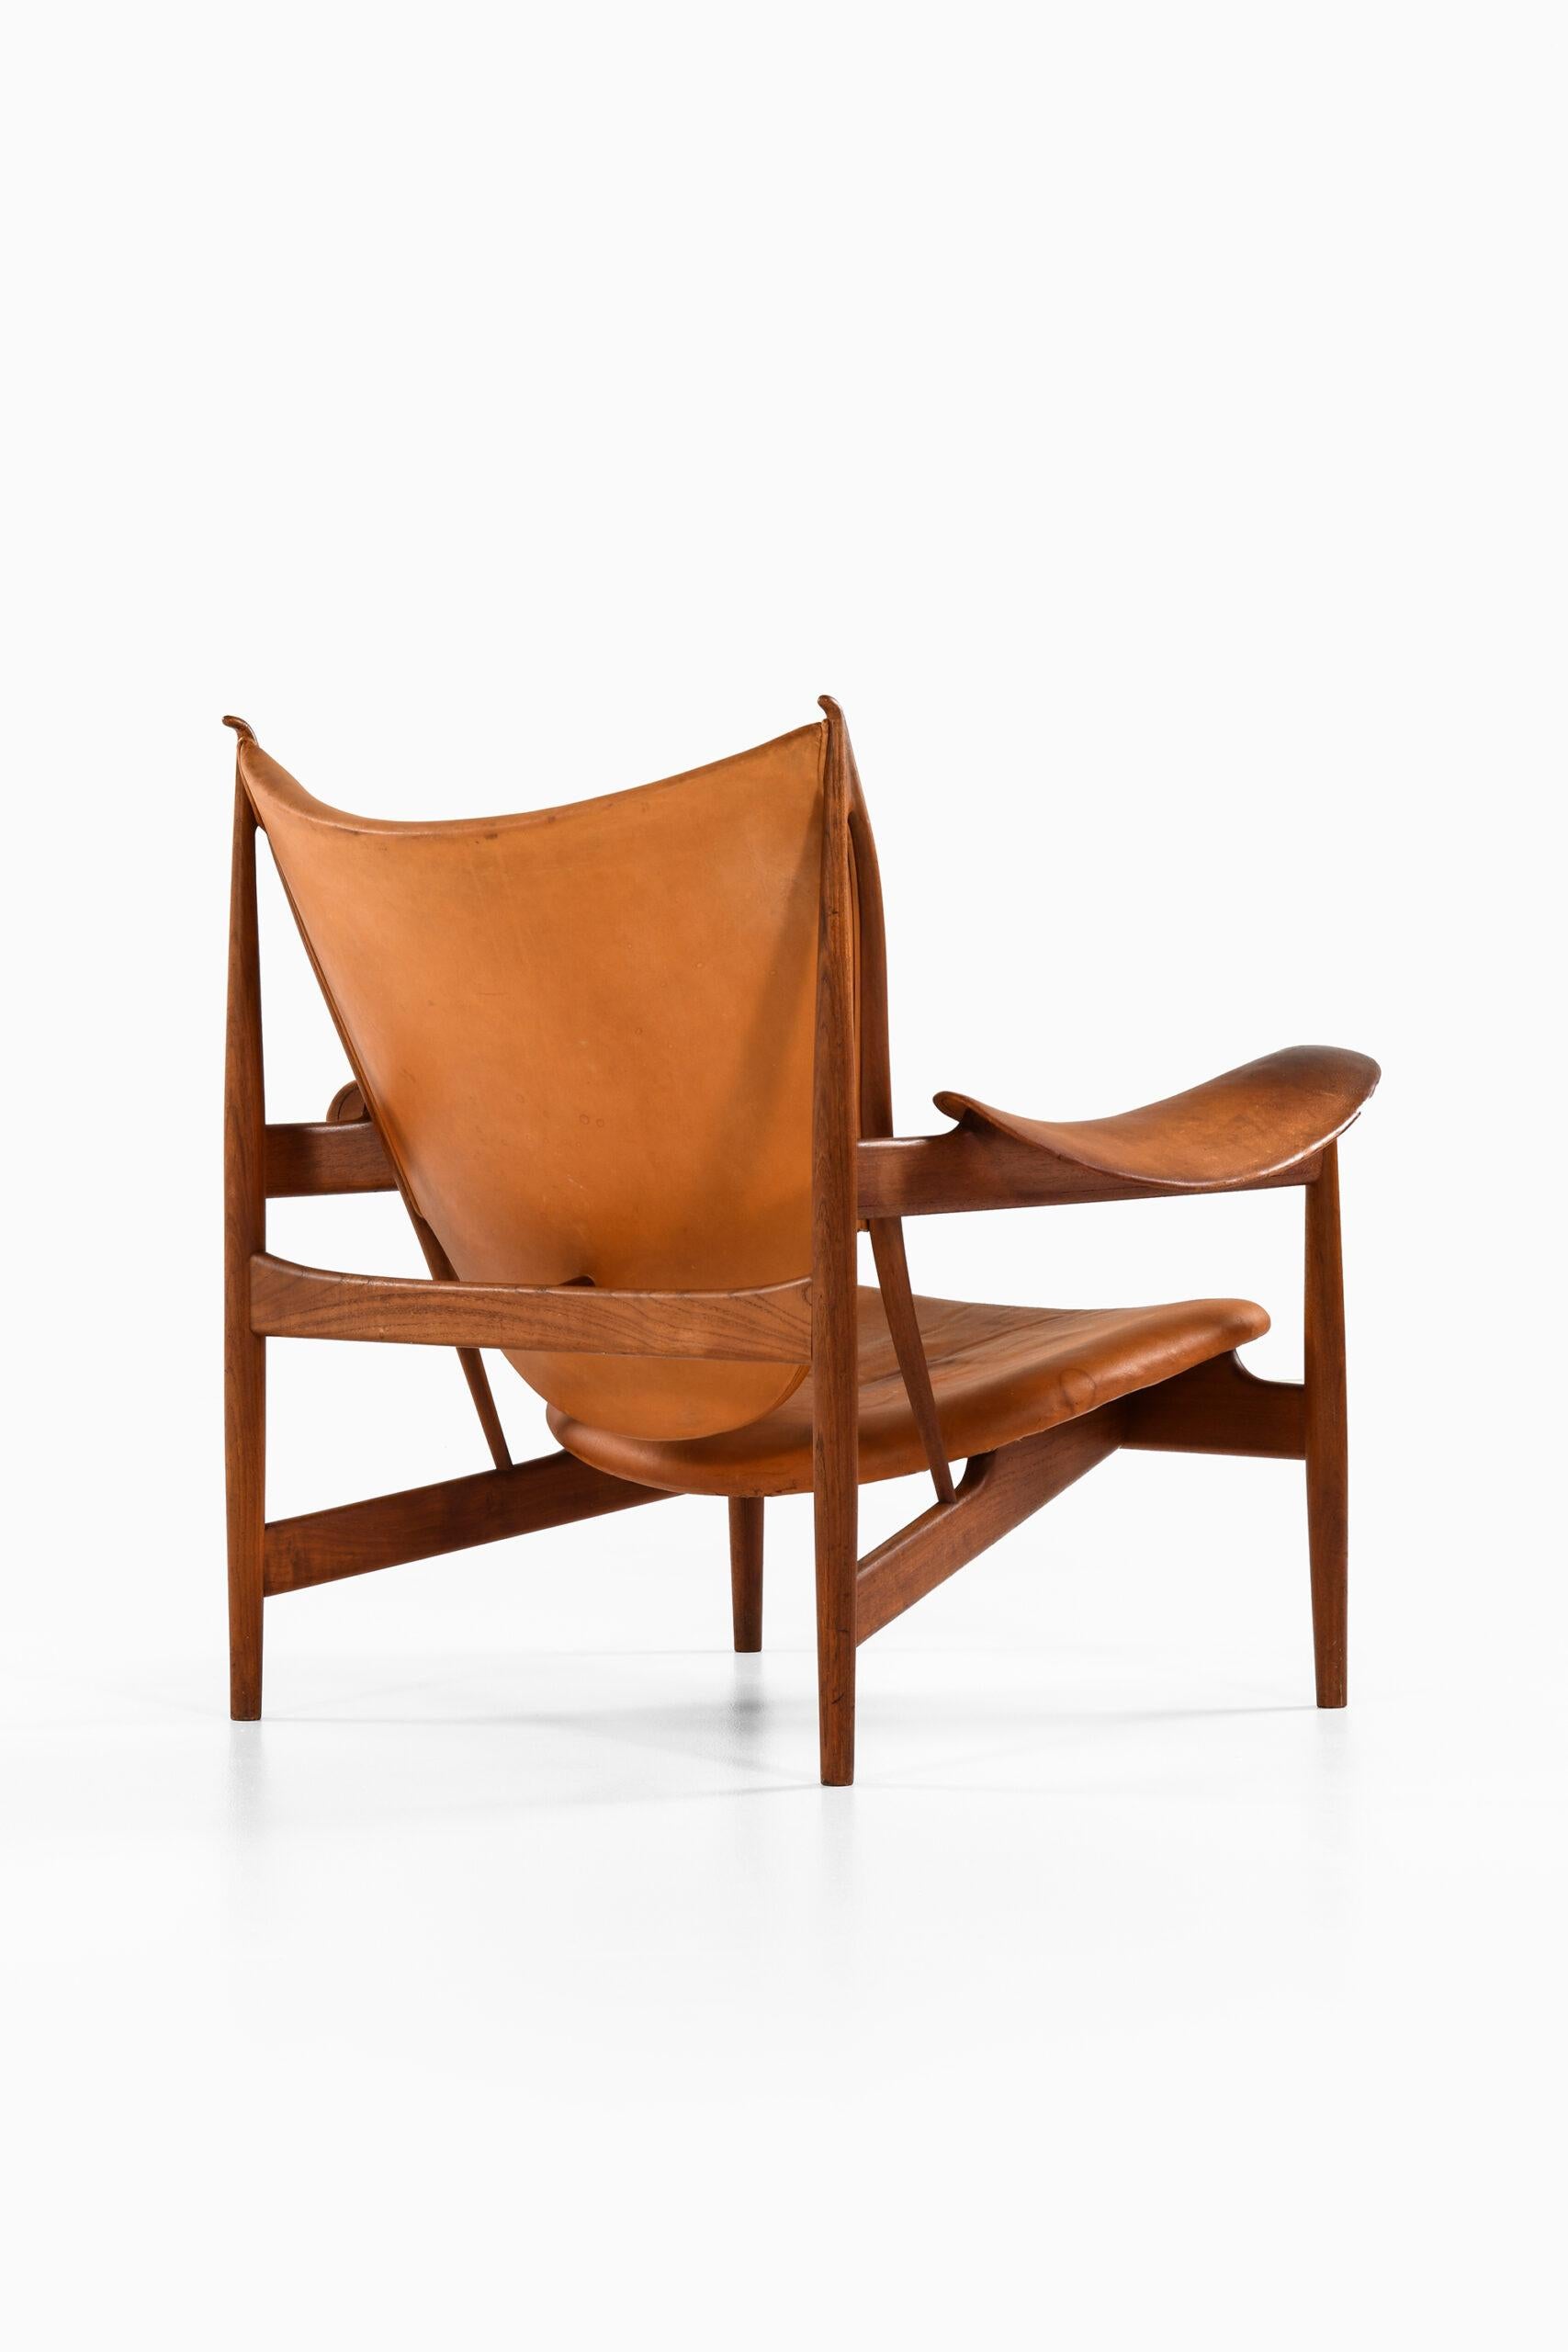 Finn Juhl Chieftain Easy Chair Produced by Cabinetmaker Niels Vodder 7